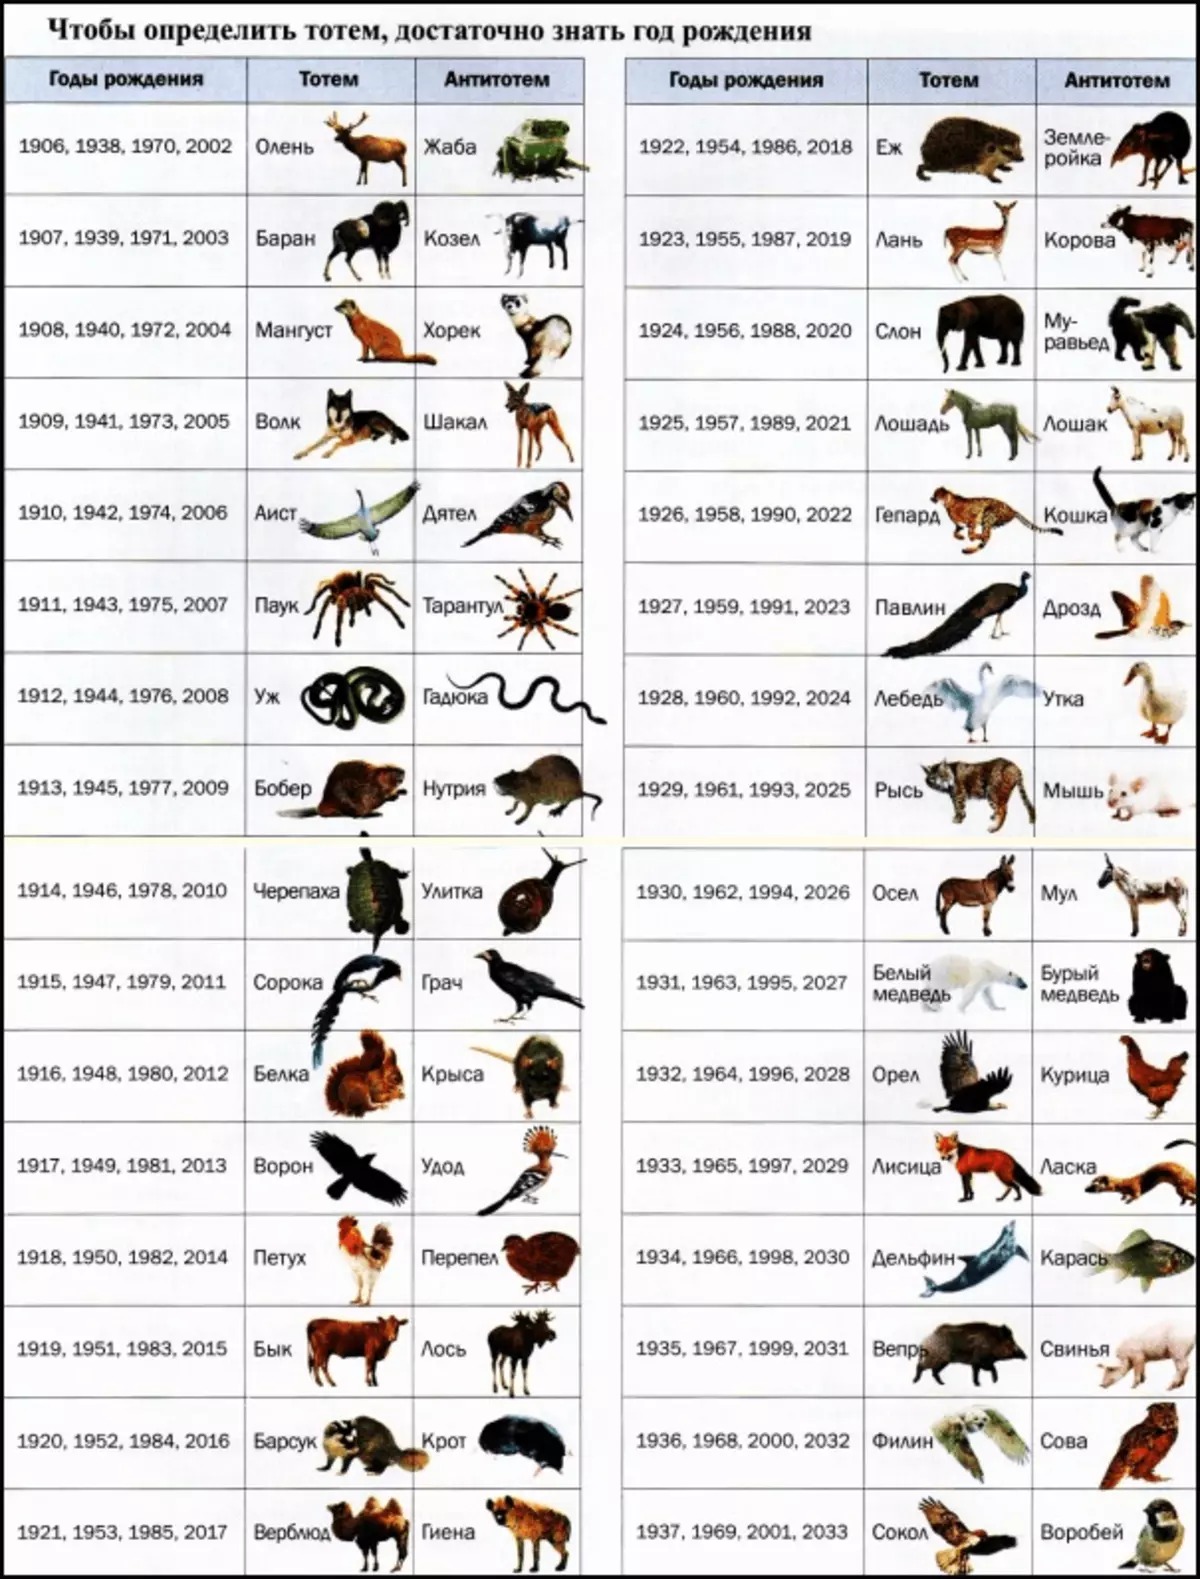 Animal data